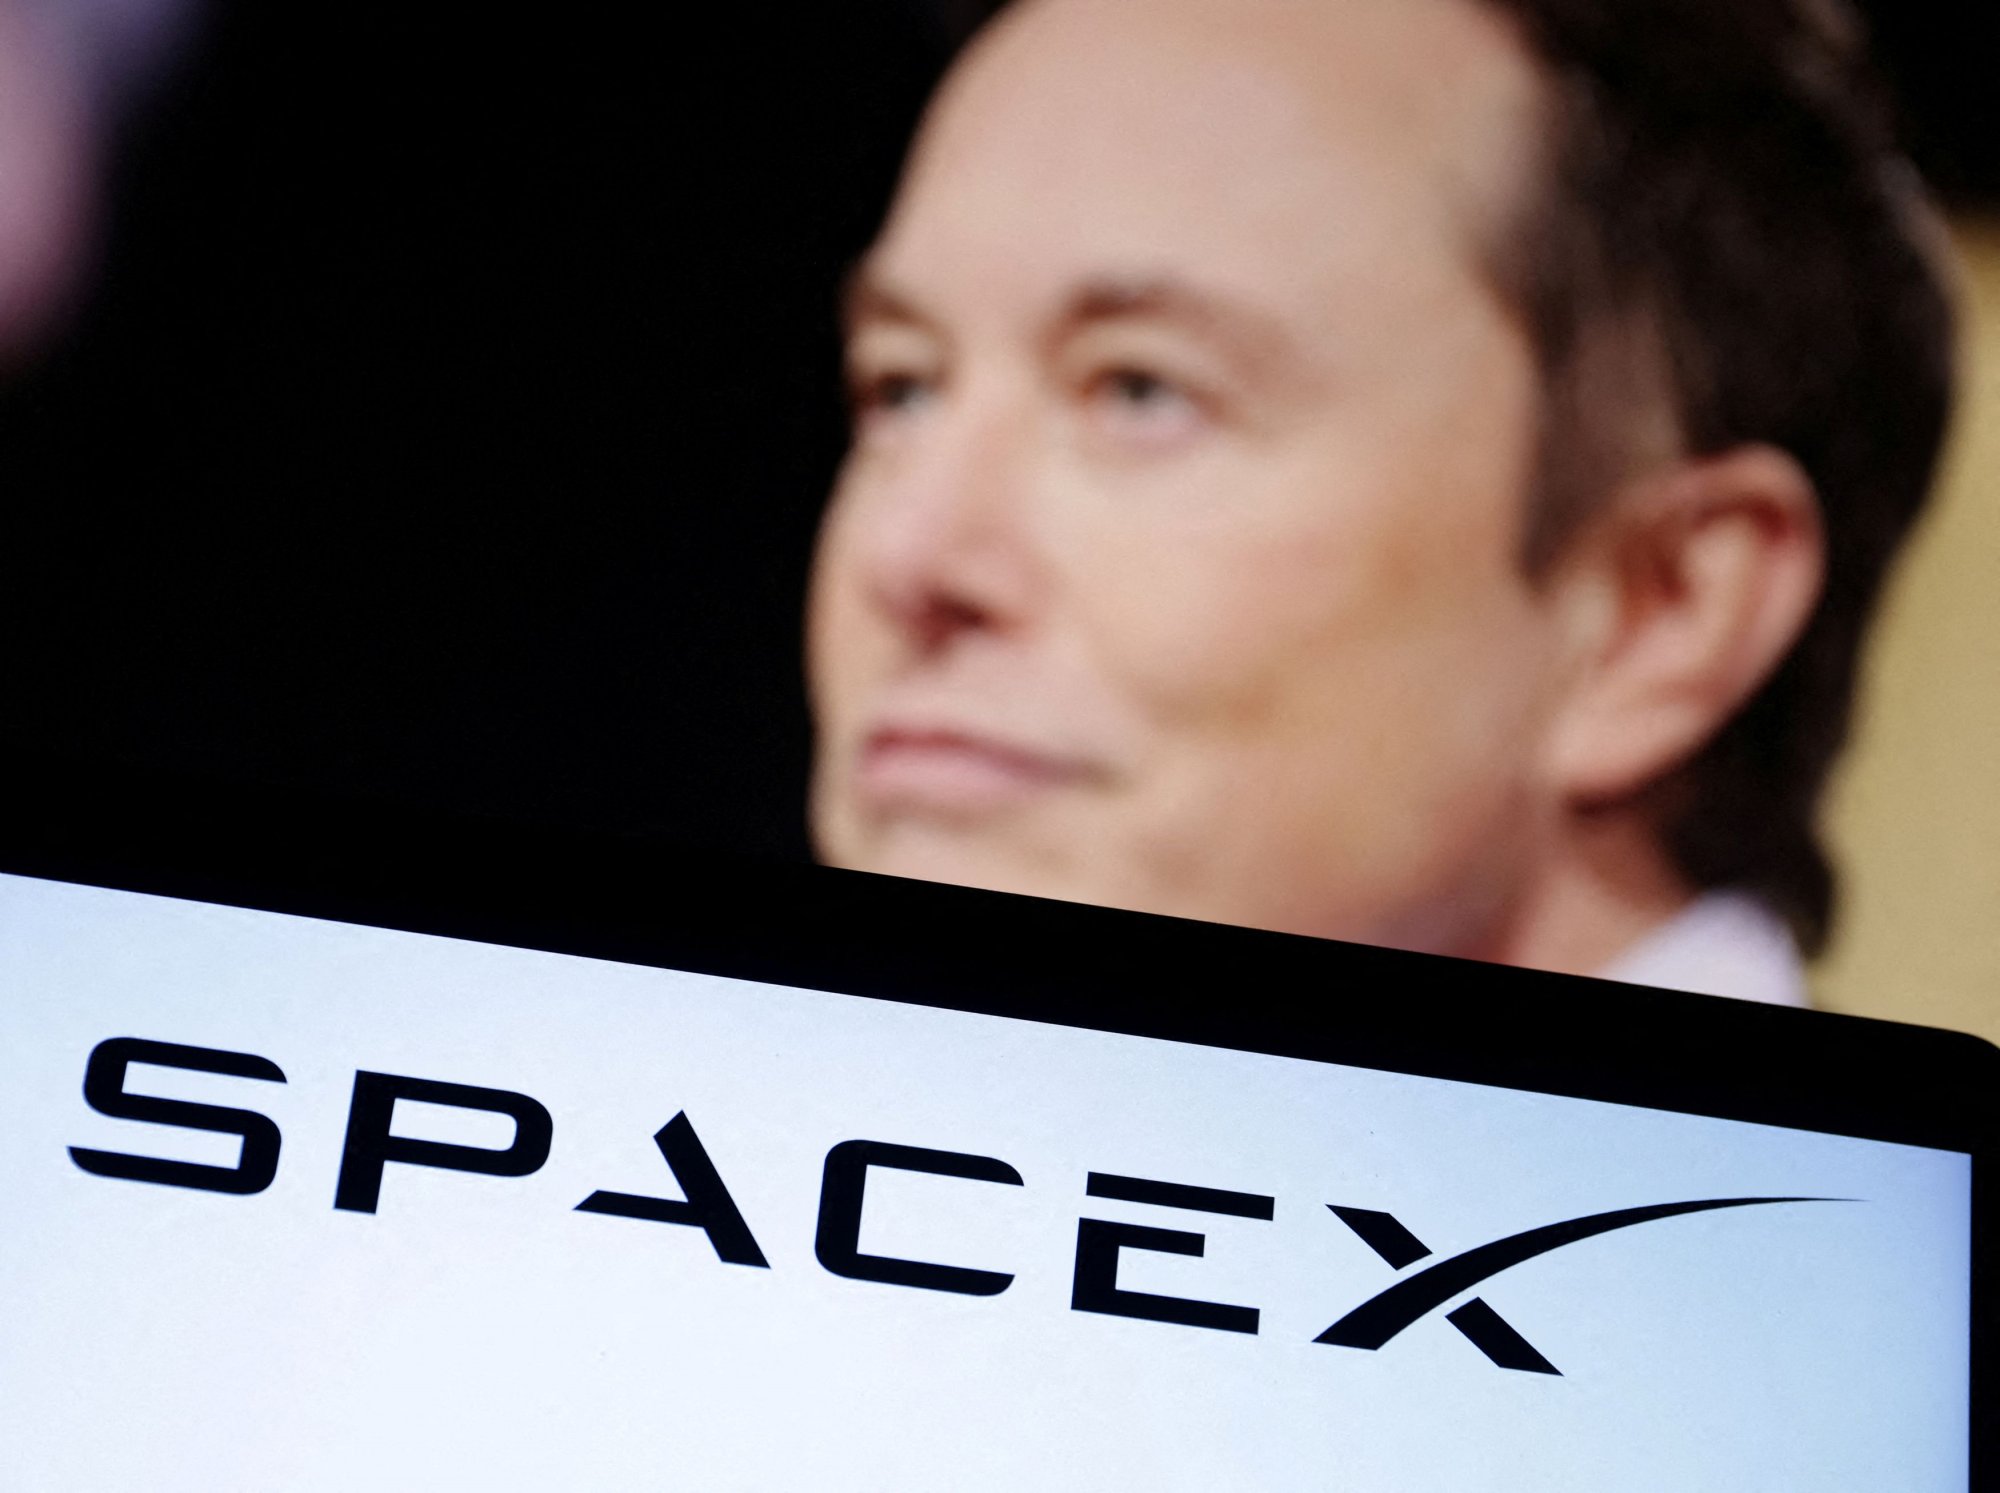 SpaceX: Καθηλώνεται ο πύραυλος Falcon 9, παγώνουν οι αποστολές αστροναυτών